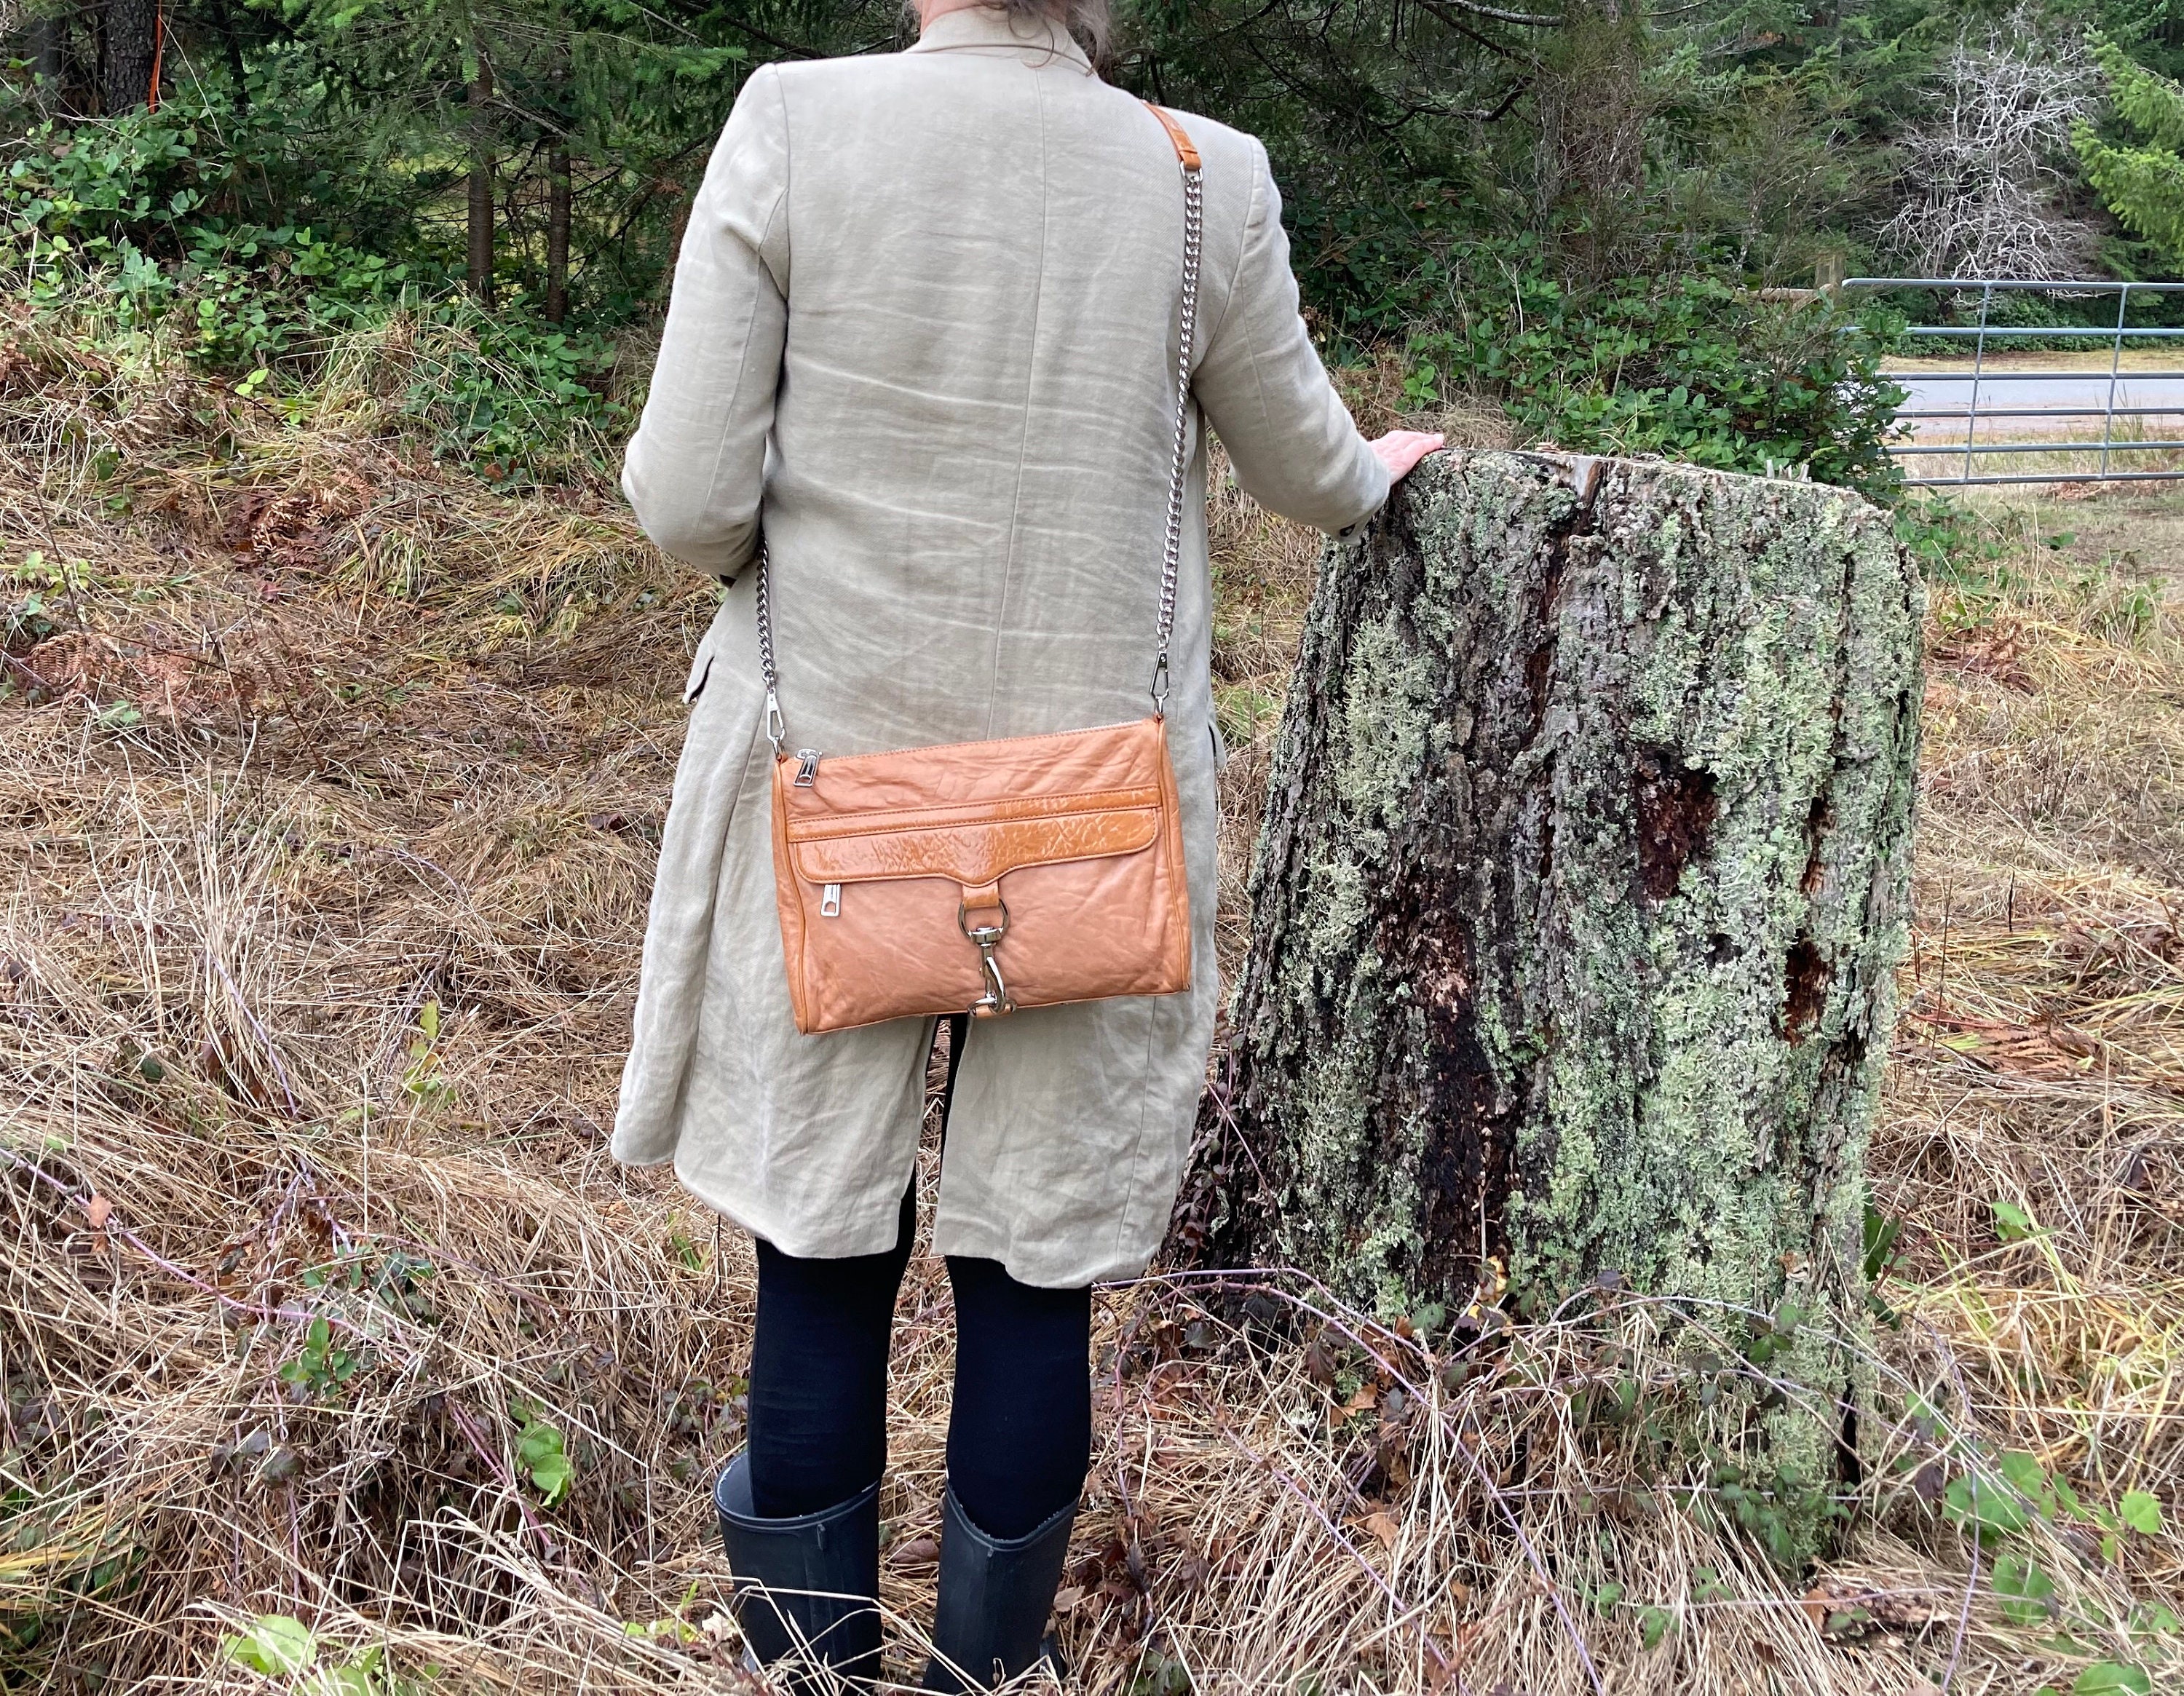 Rebecca Minkoff kate leather mini tote bag in brown